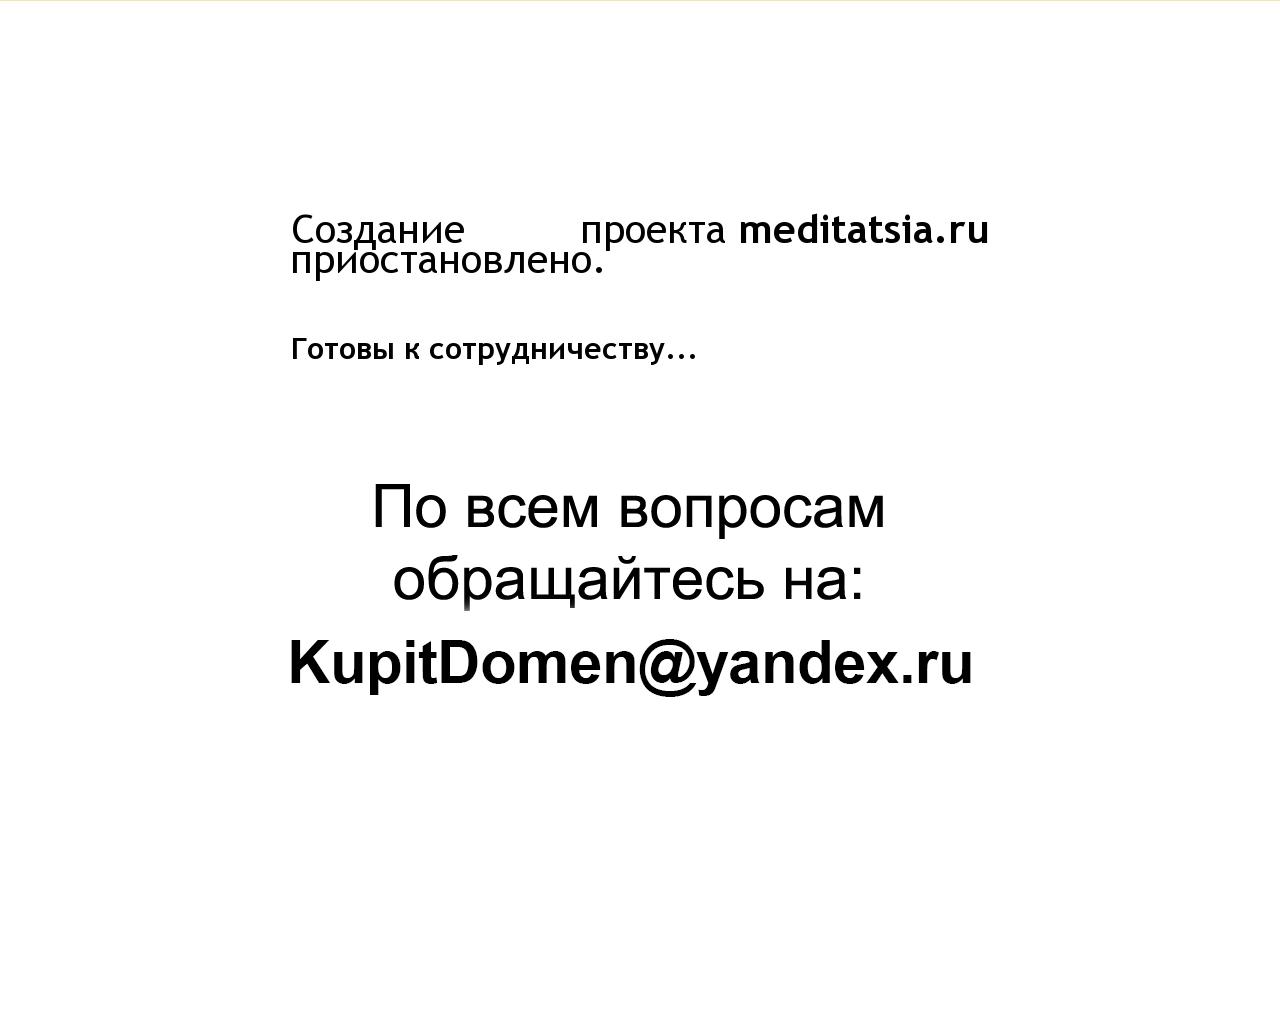 Изображение сайта meditatsia.ru в разрешении 1280x1024